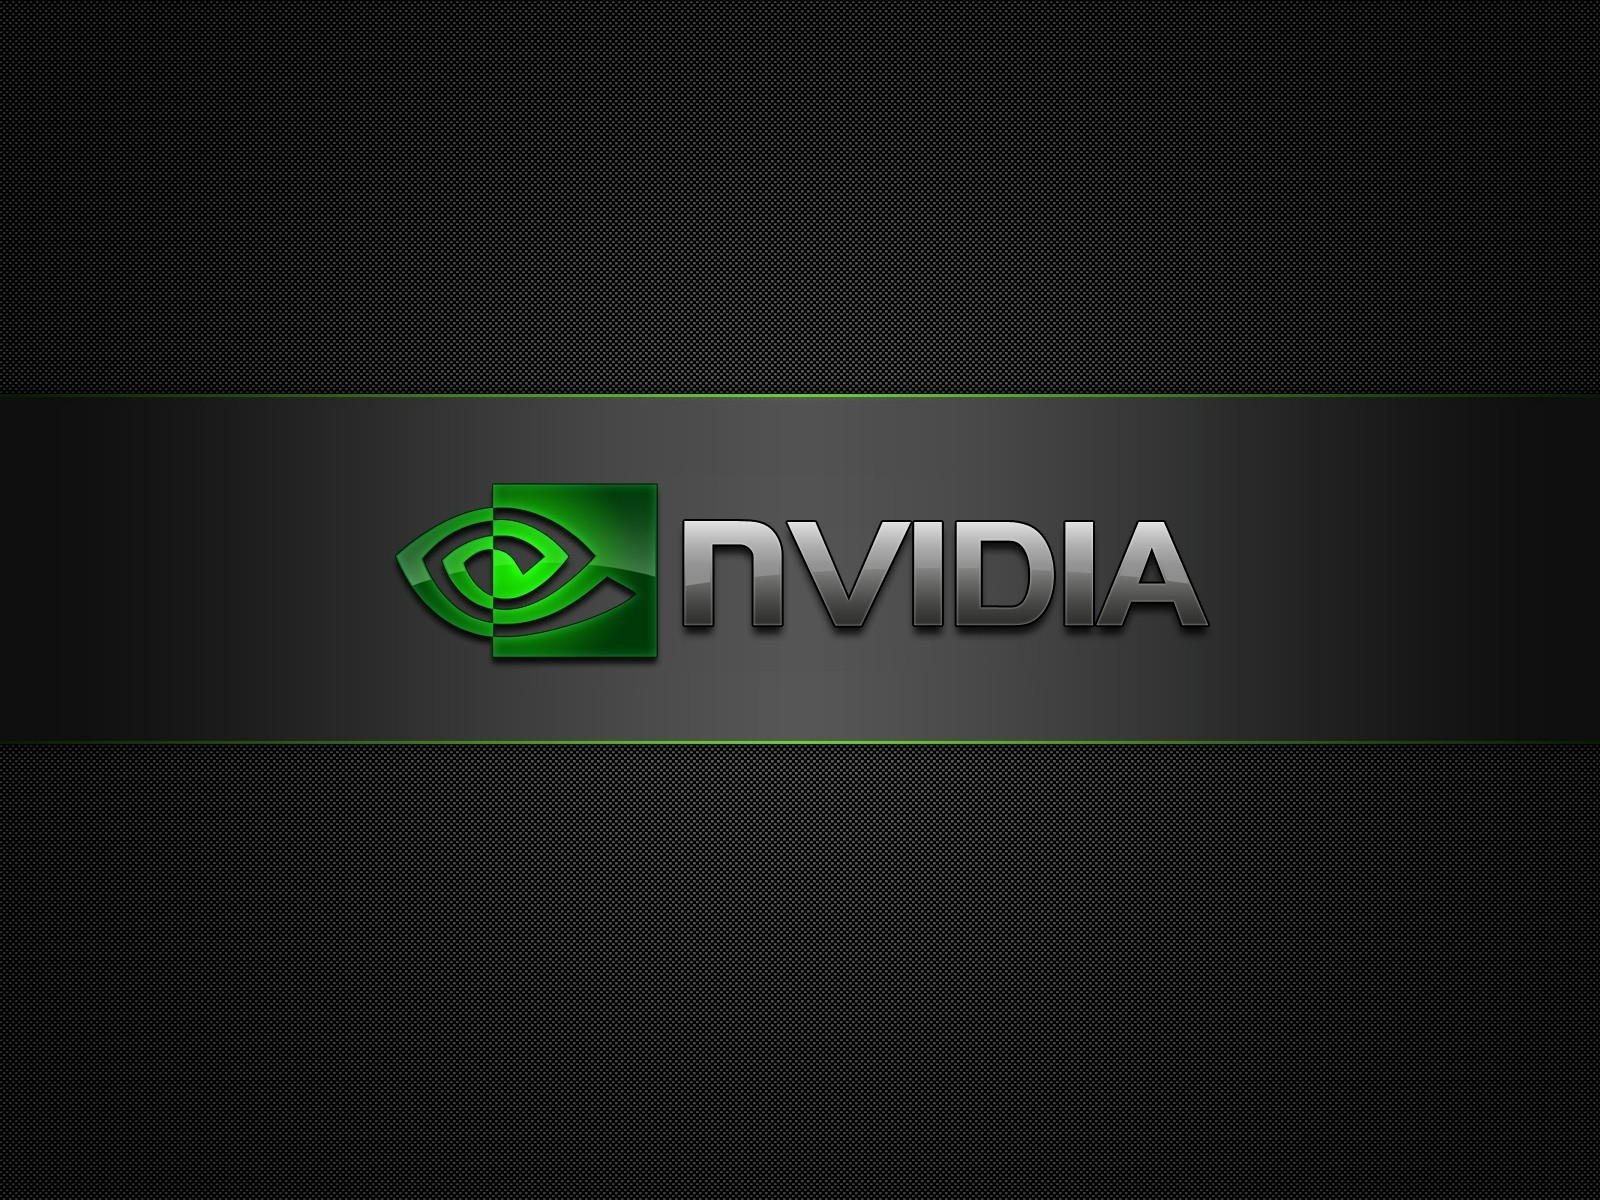 Nvidia Minimalistic for 1600 x 1200 resolution